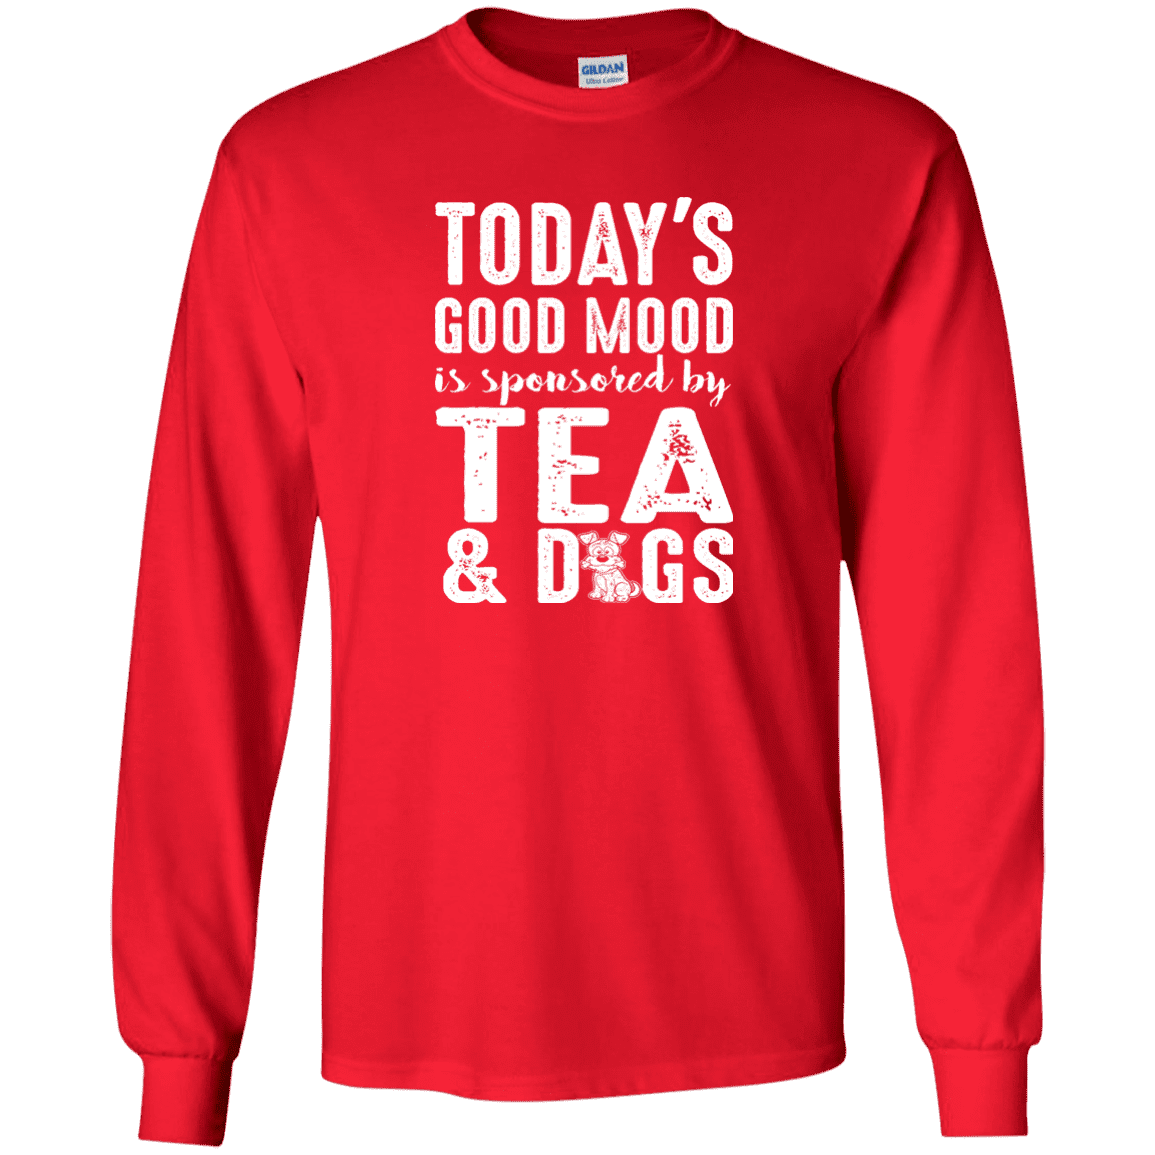 Today's Good Mood Tea & Dogs - Long Sleeve T Shirt.